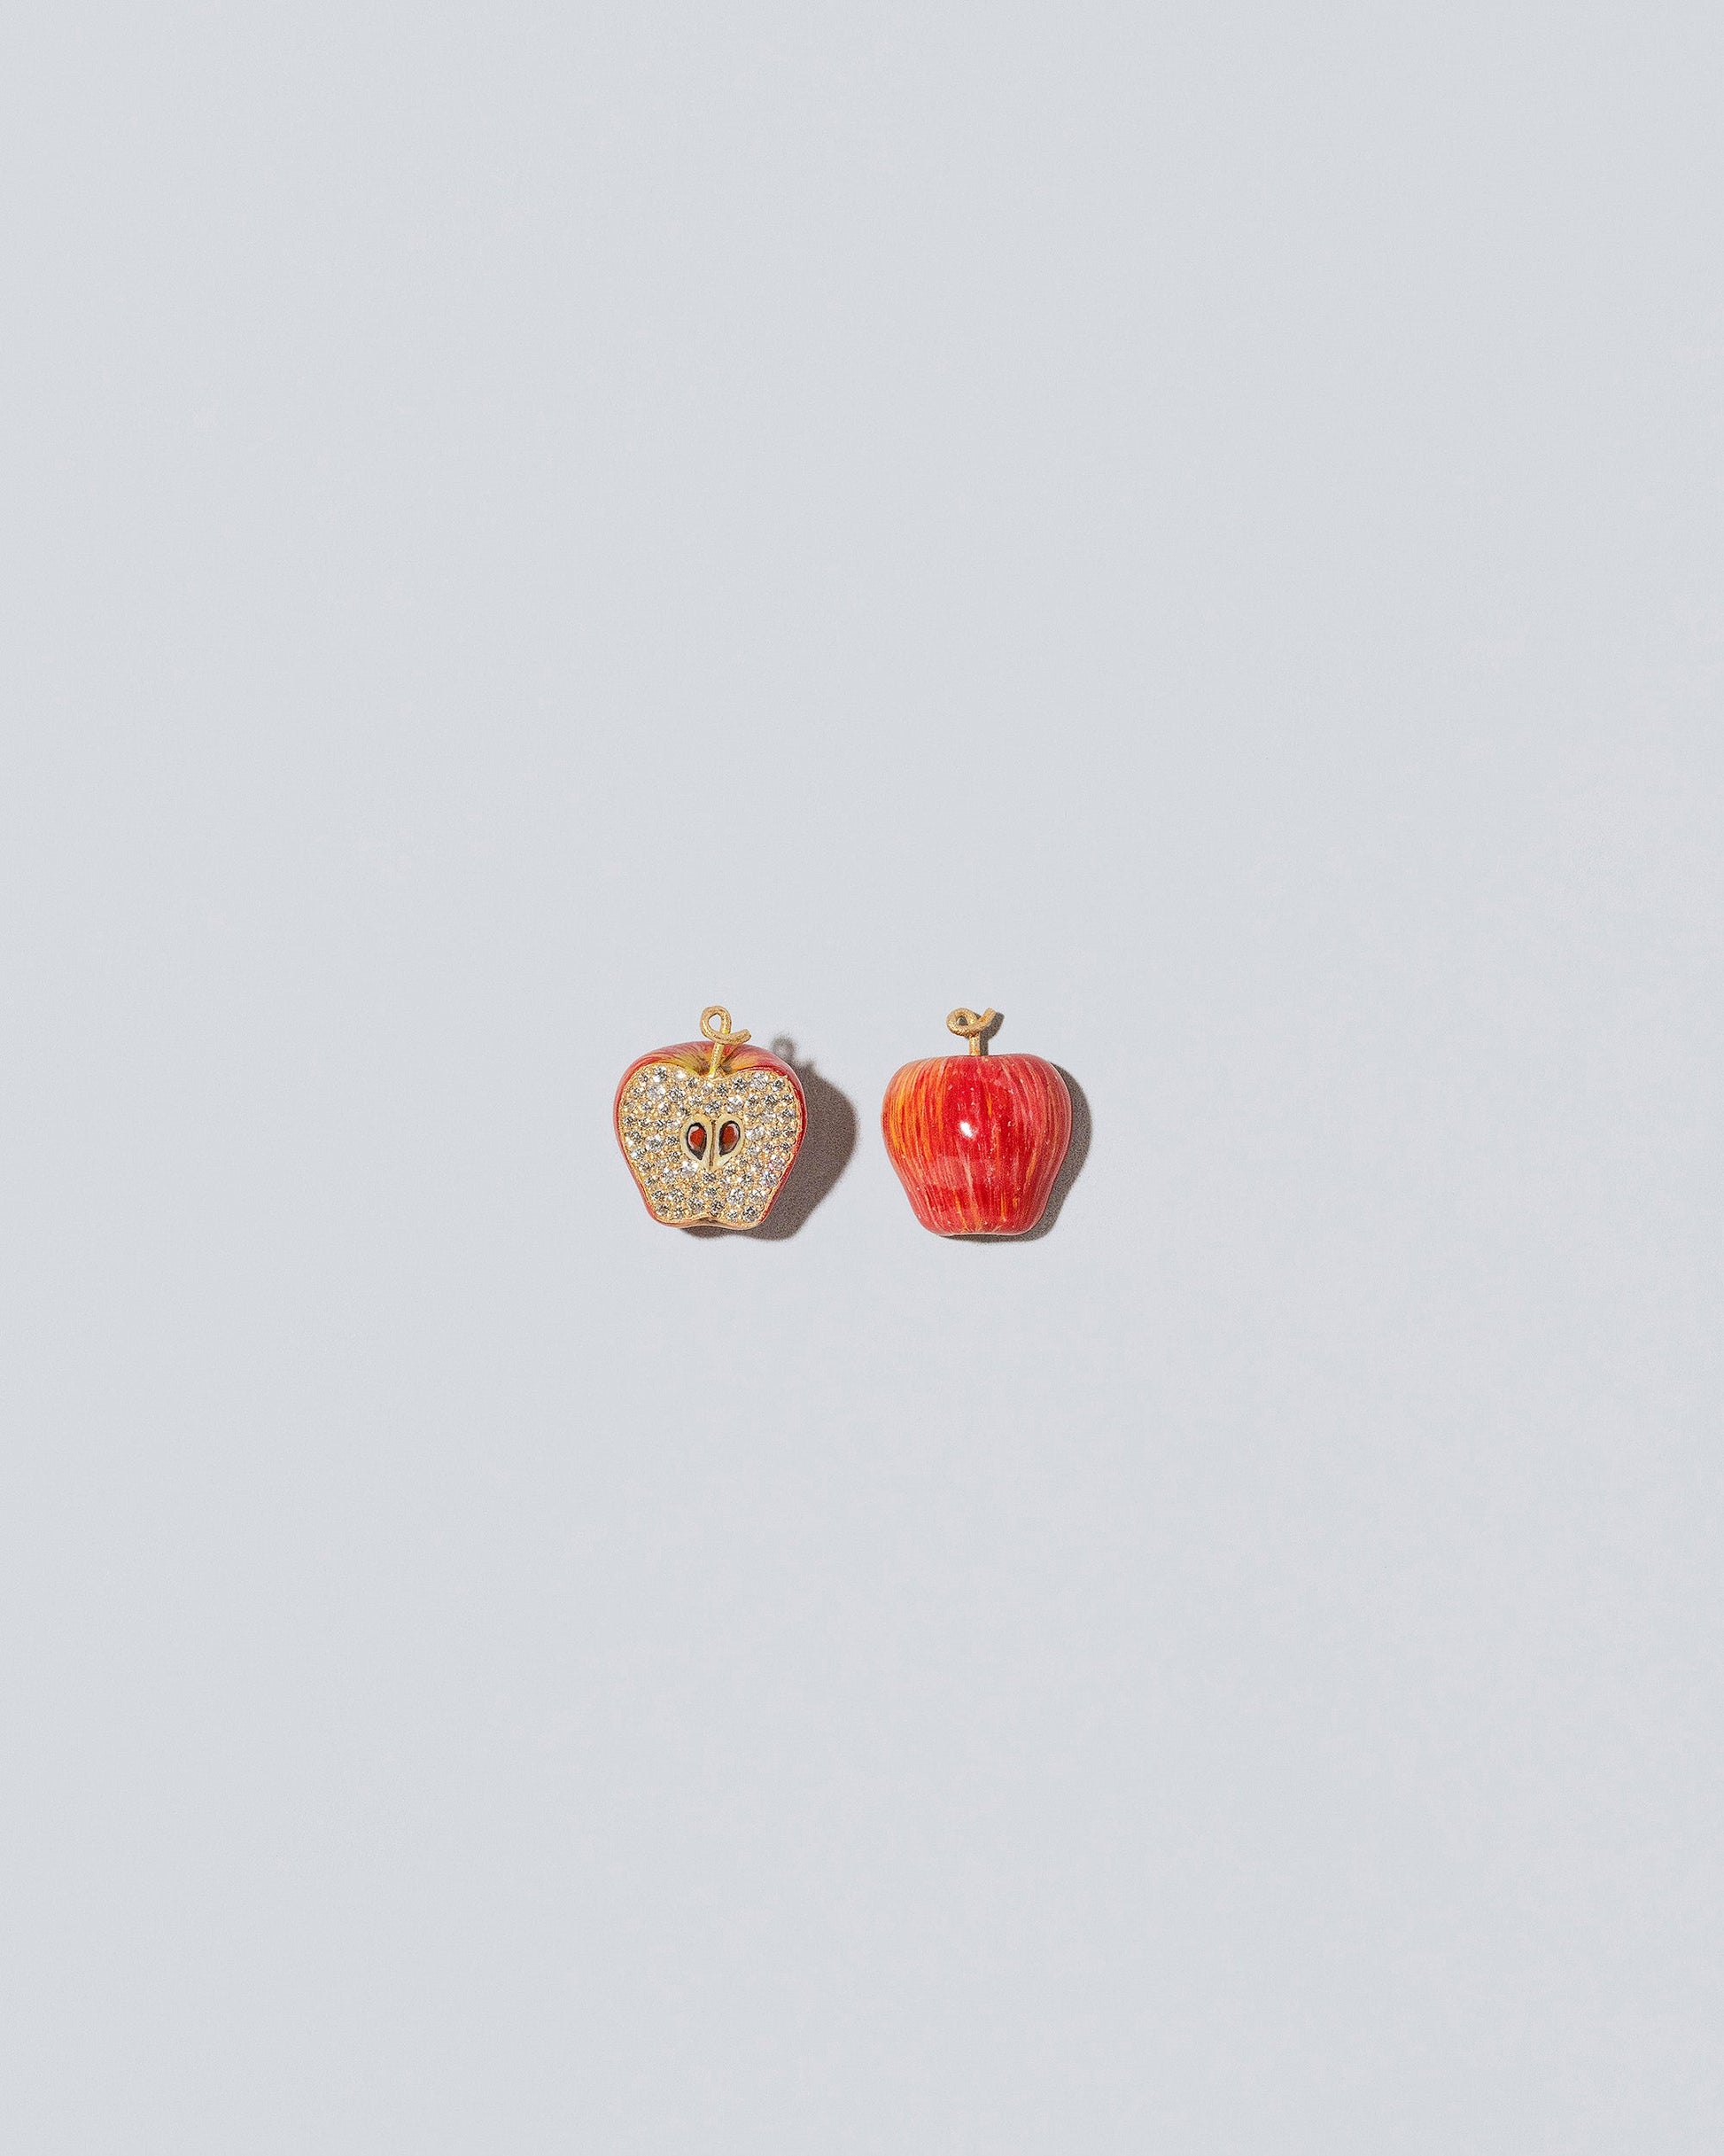  Red Apple Charm - Fulls on light color background.